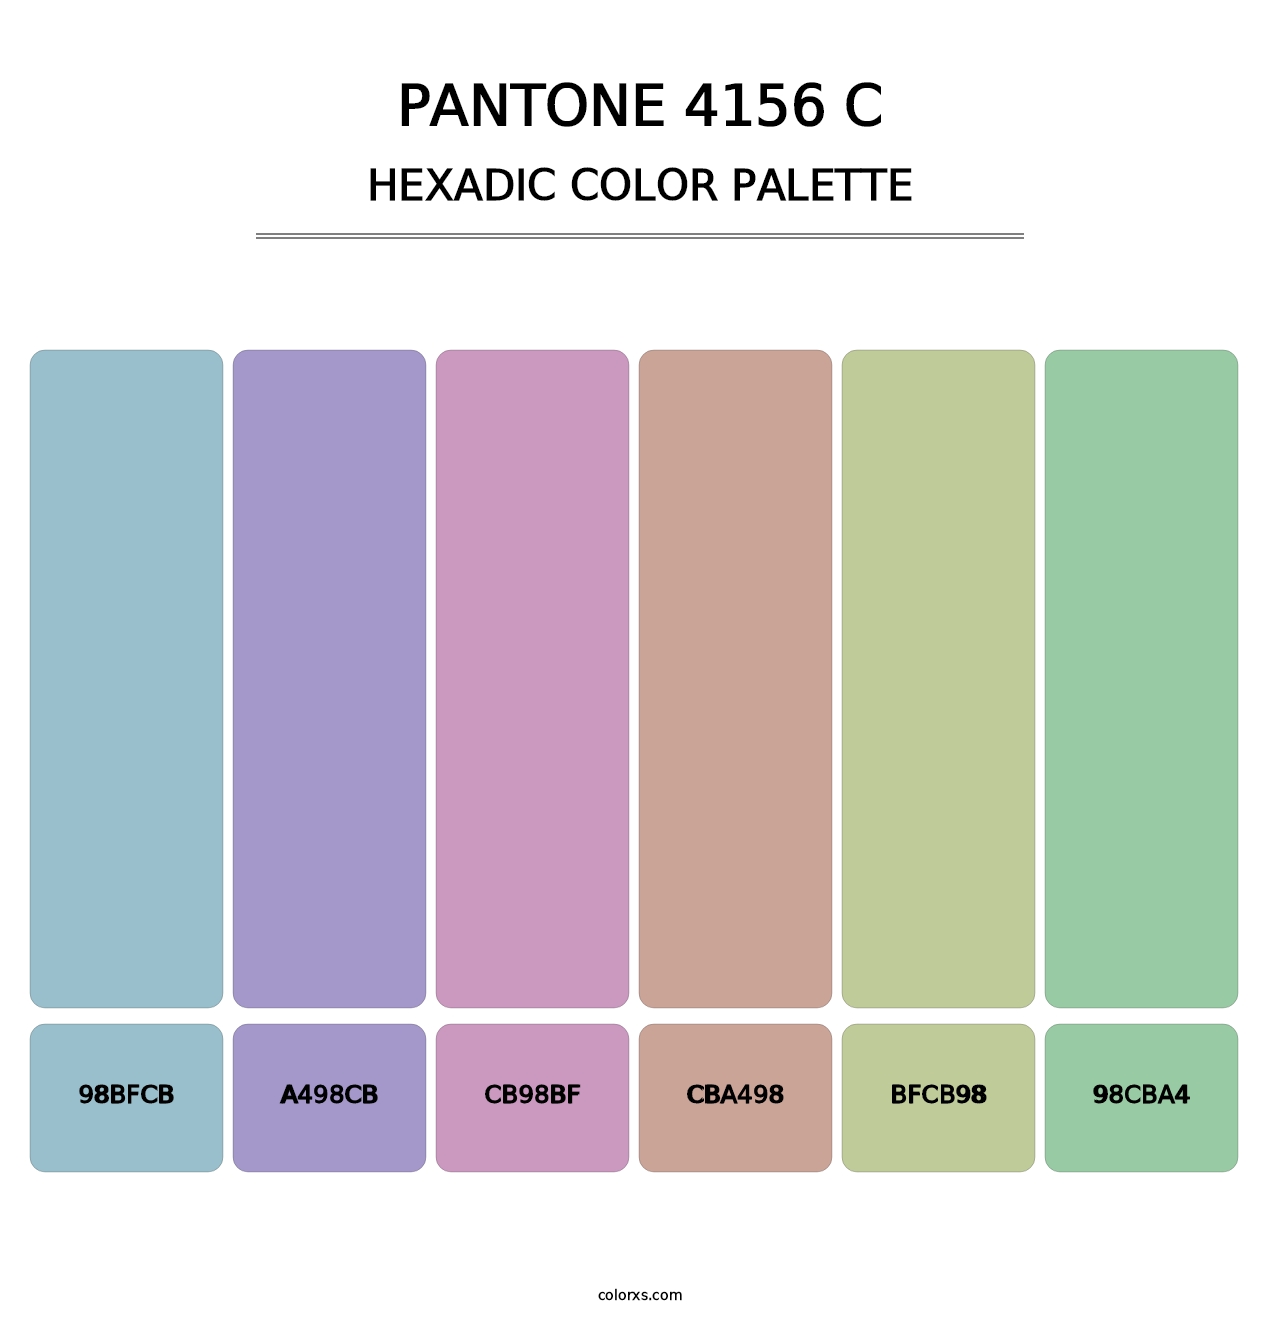 PANTONE 4156 C - Hexadic Color Palette